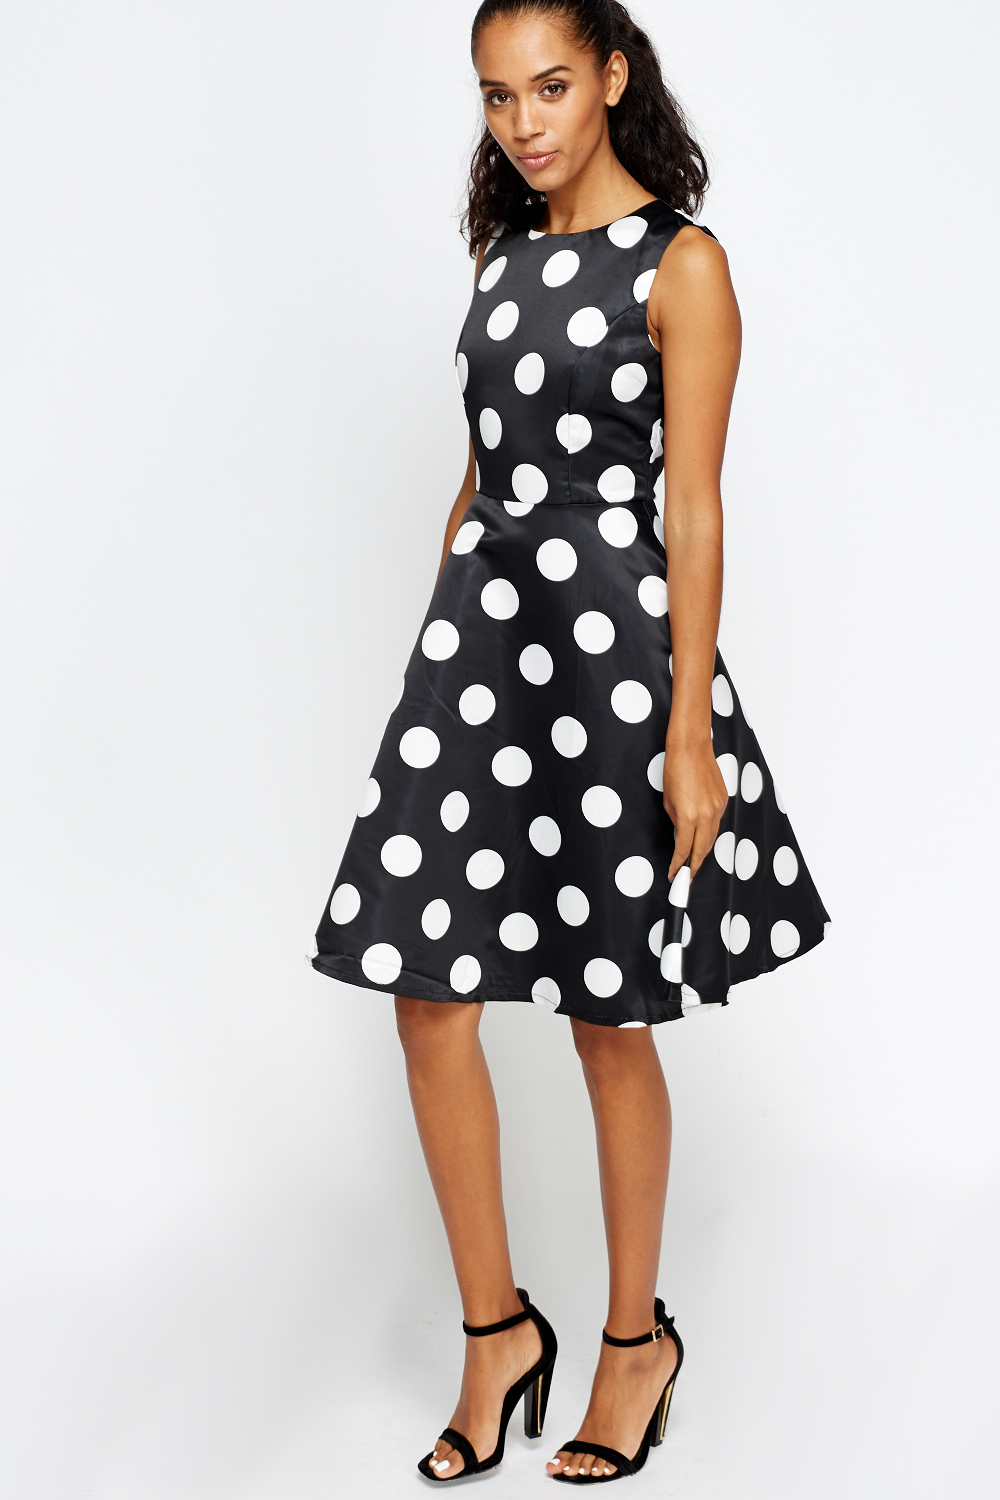 Large Polka Dot Skater Dress - Just $7